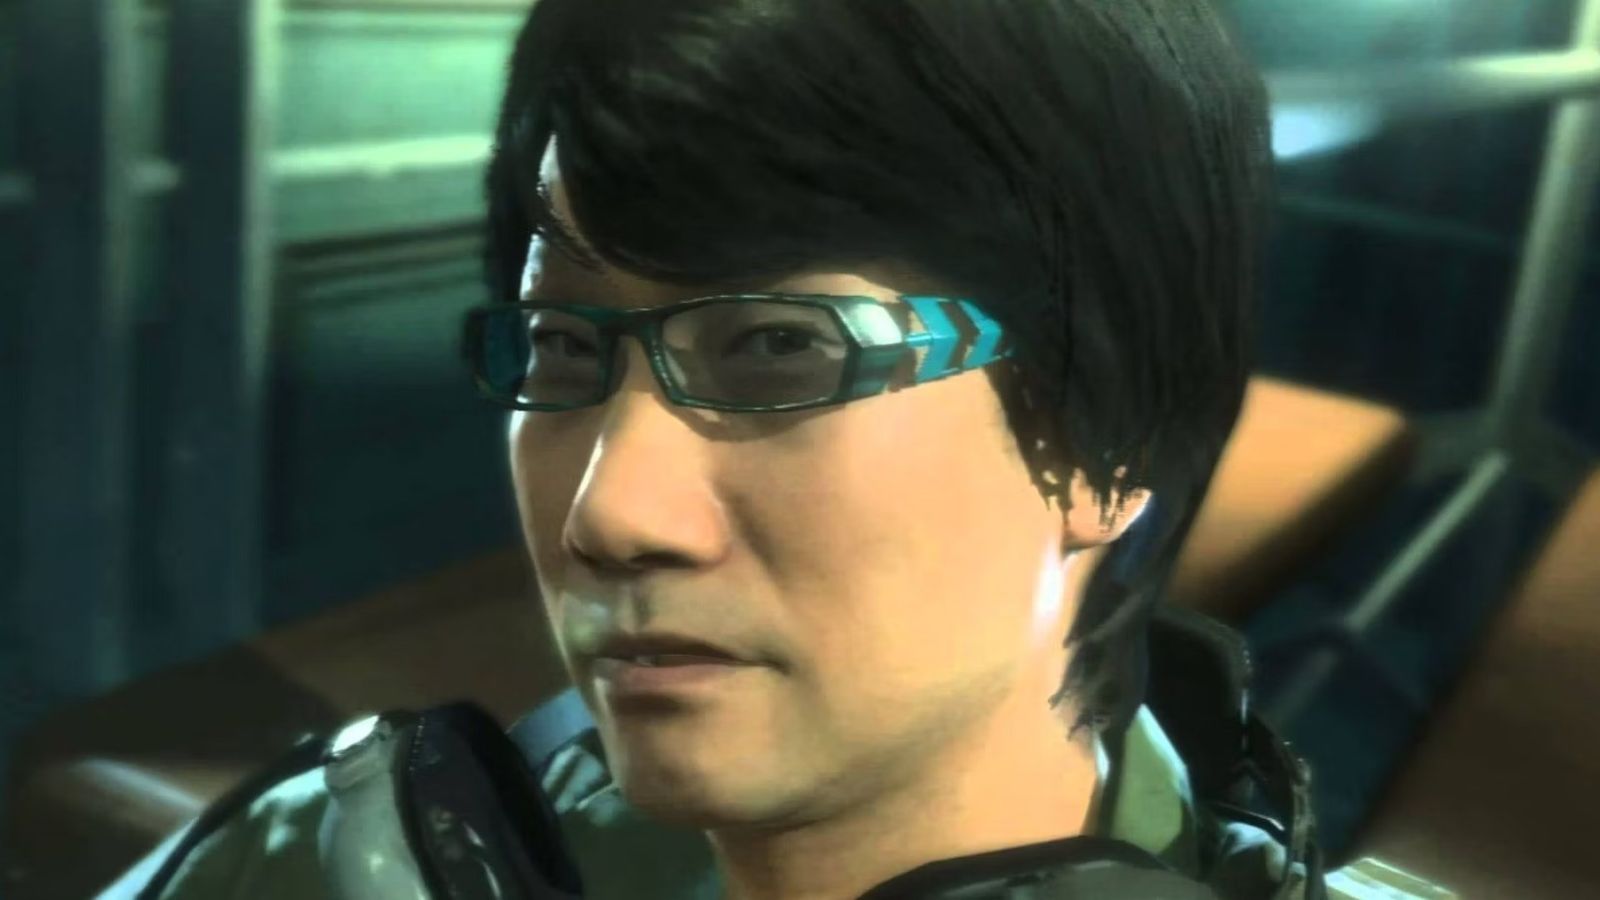 Hideo Kojima cameos in Metal Gear Solid 5